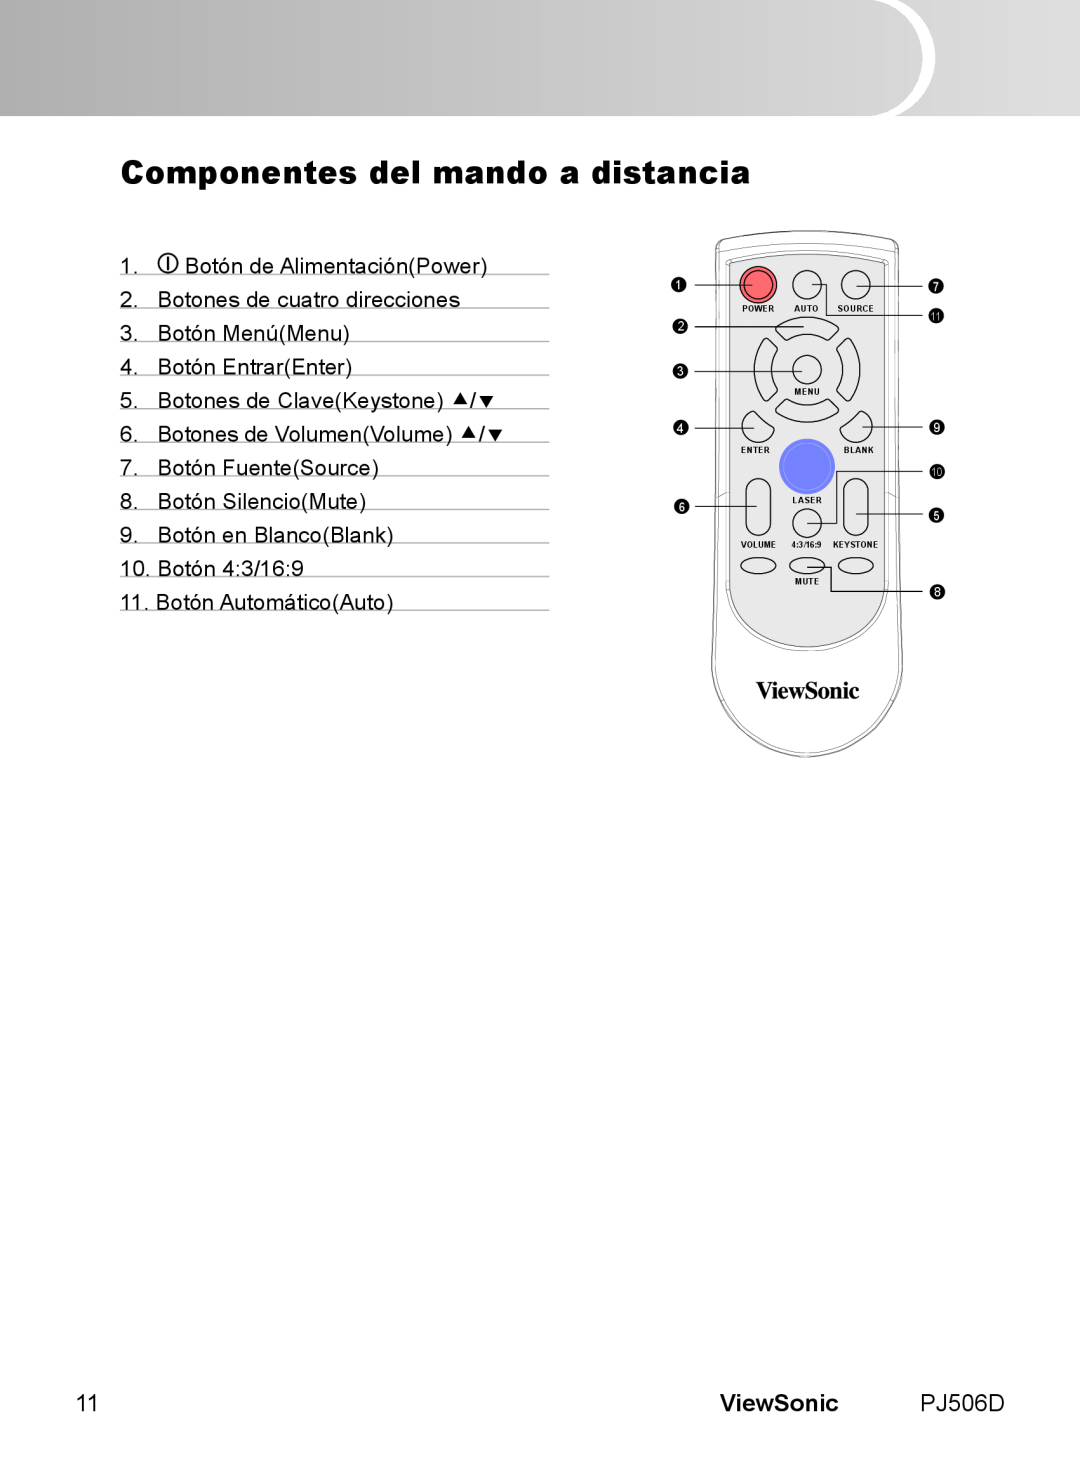 ViewSonic VS11452 Componentes del mando a distancia, ViewSonic, Power Auto, Menu, SOURCE11, Enter, Blank, Laser, Volume 